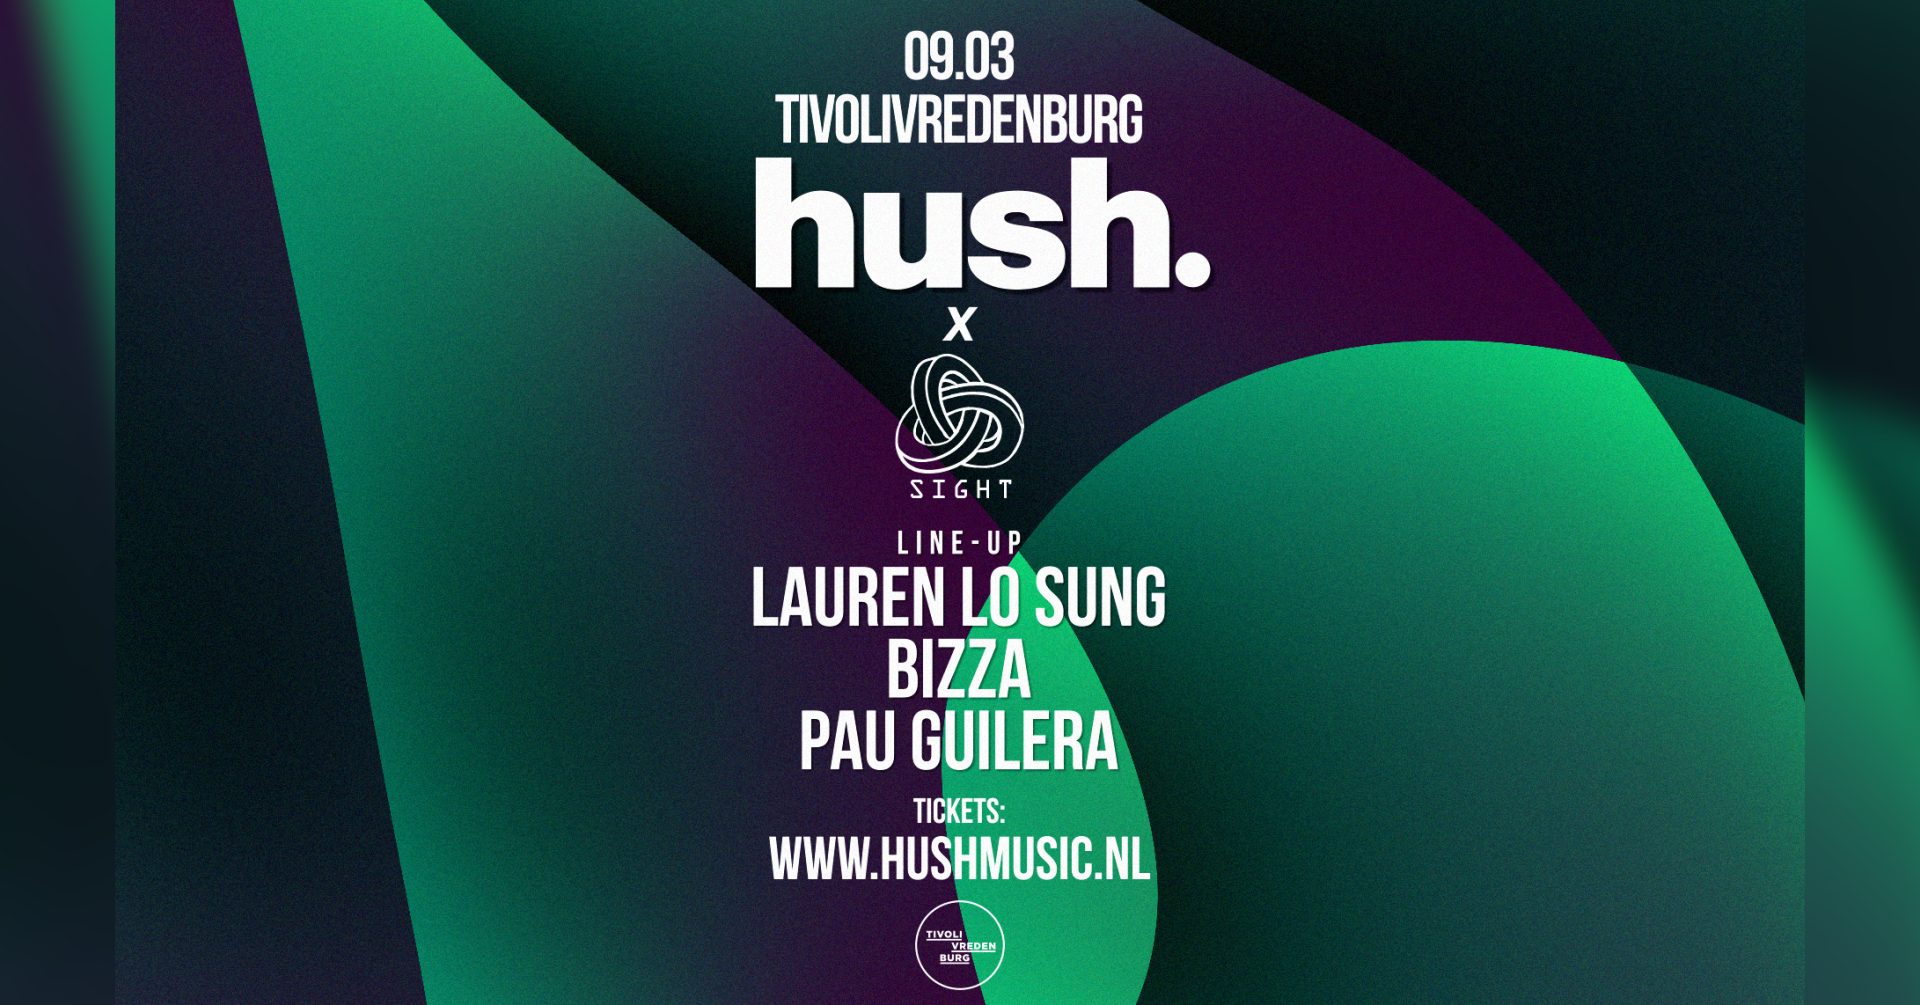 Hush. x SIGHT with Lauren Lo Sung, Bizza & Pau Guilera - フライヤー表